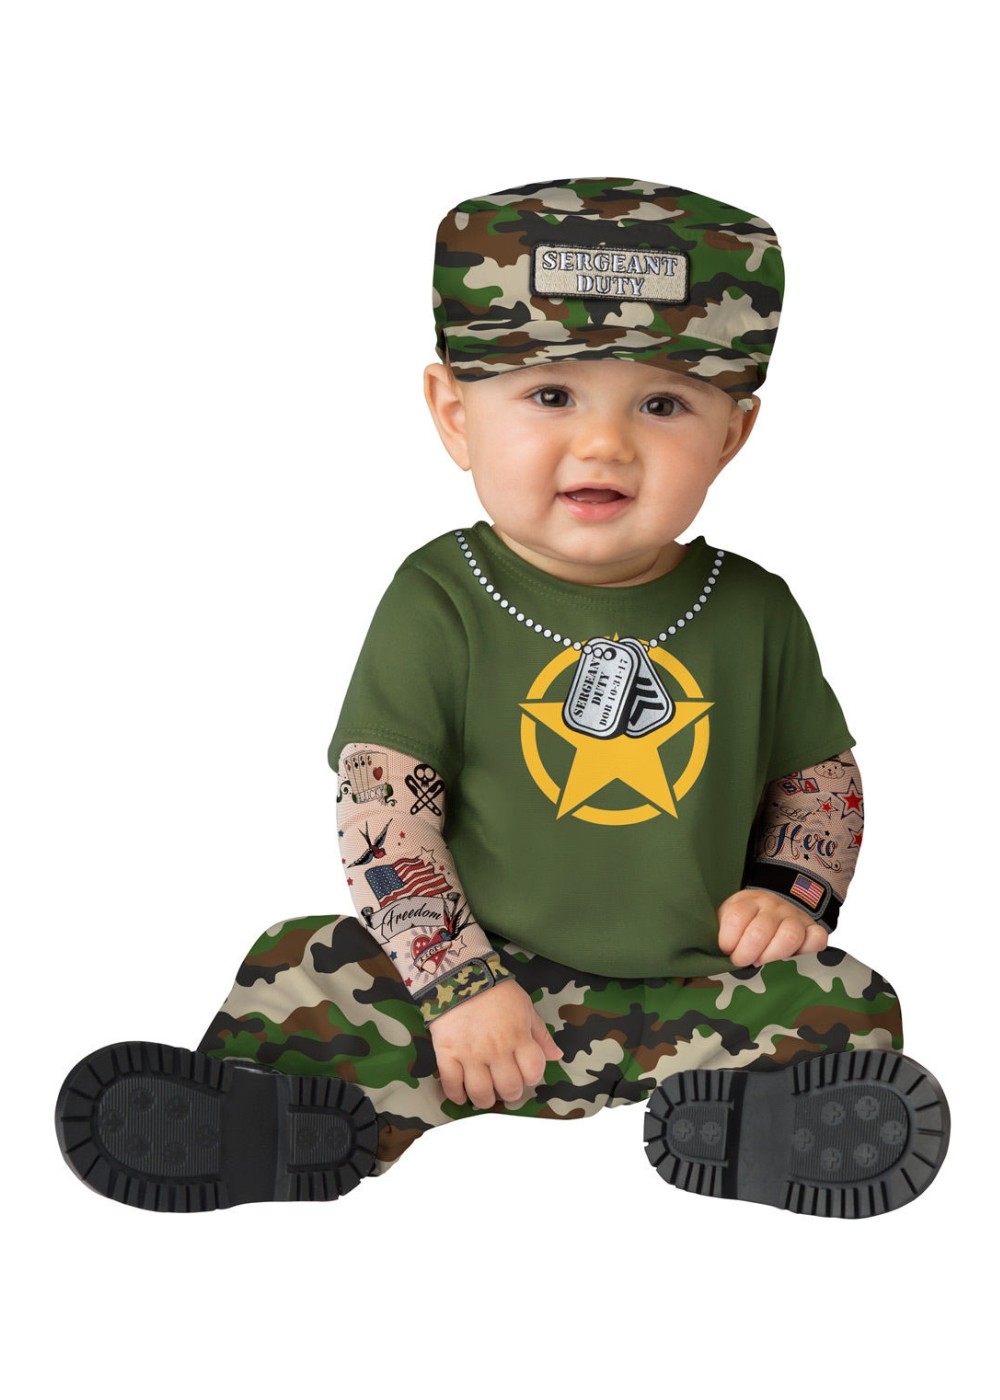 Sergeant Baby Costume